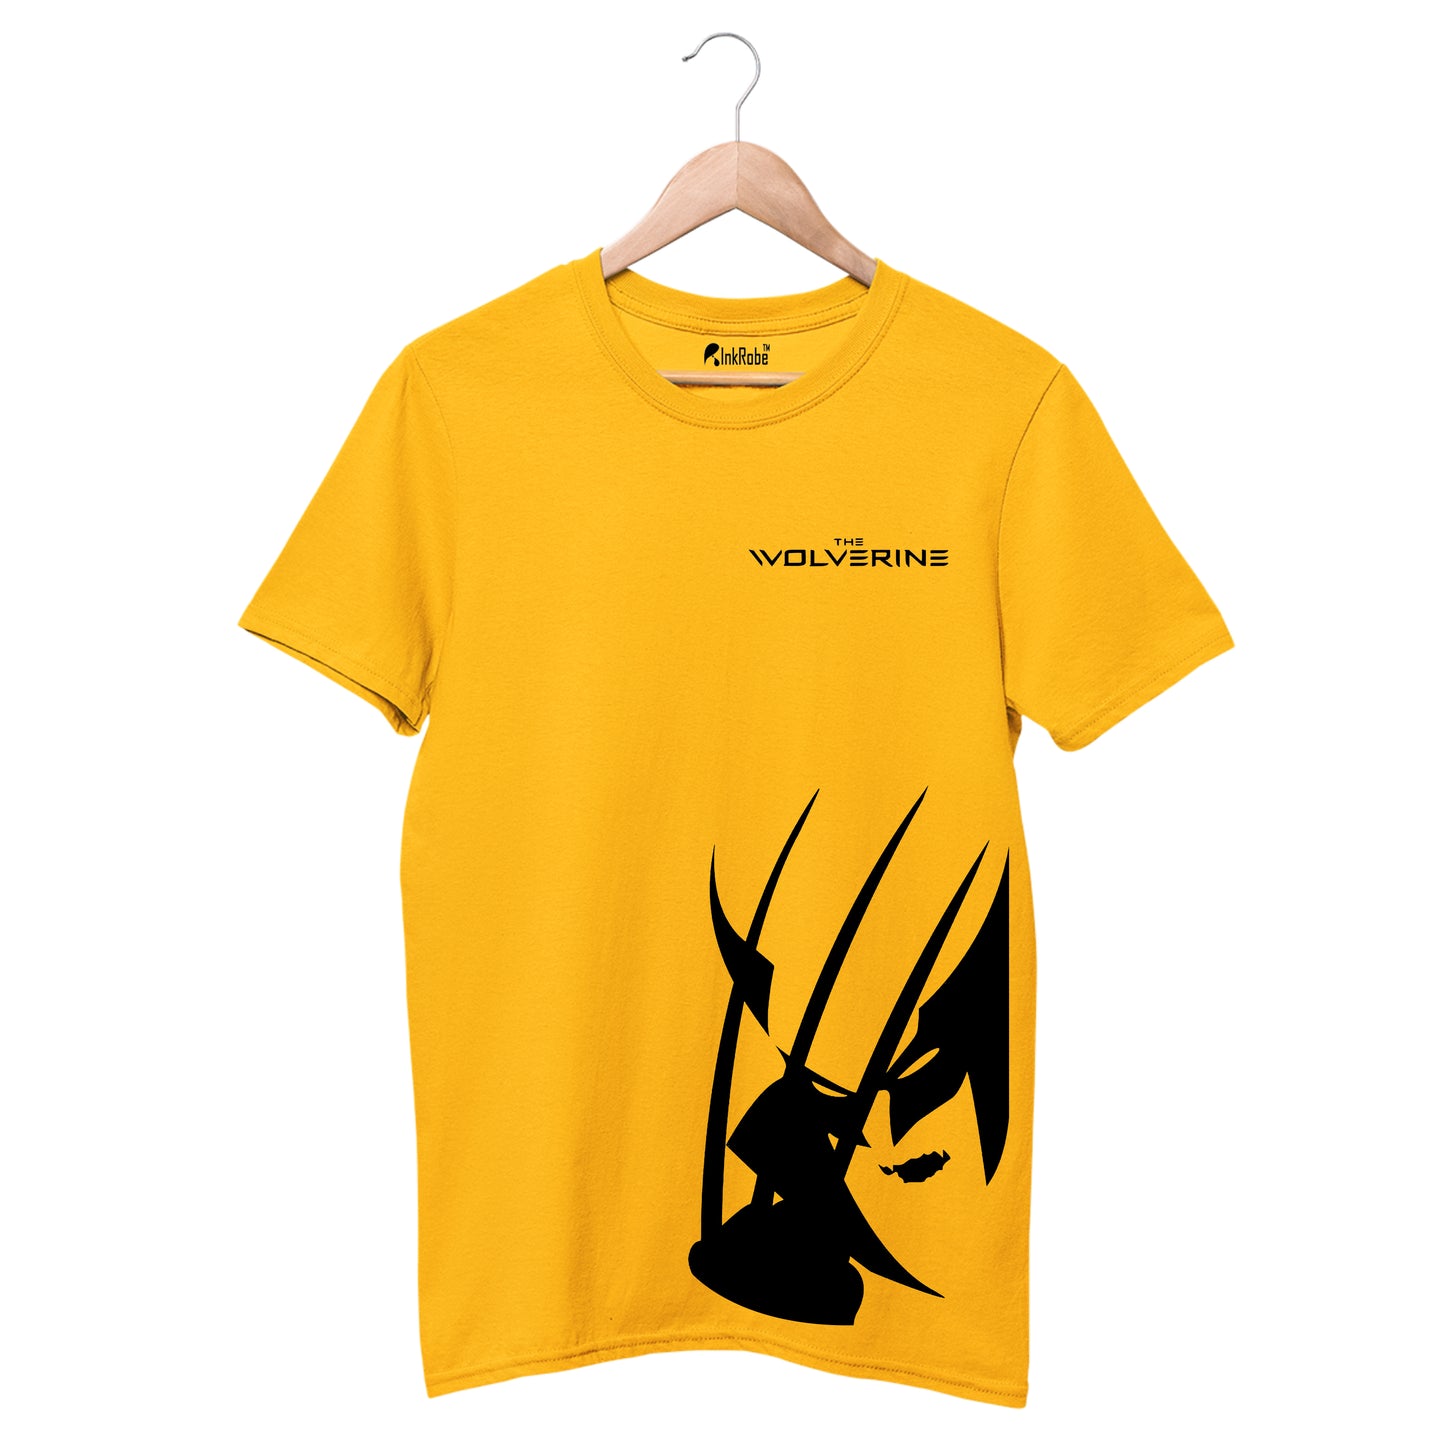 Wolverine Comic T-Shirt